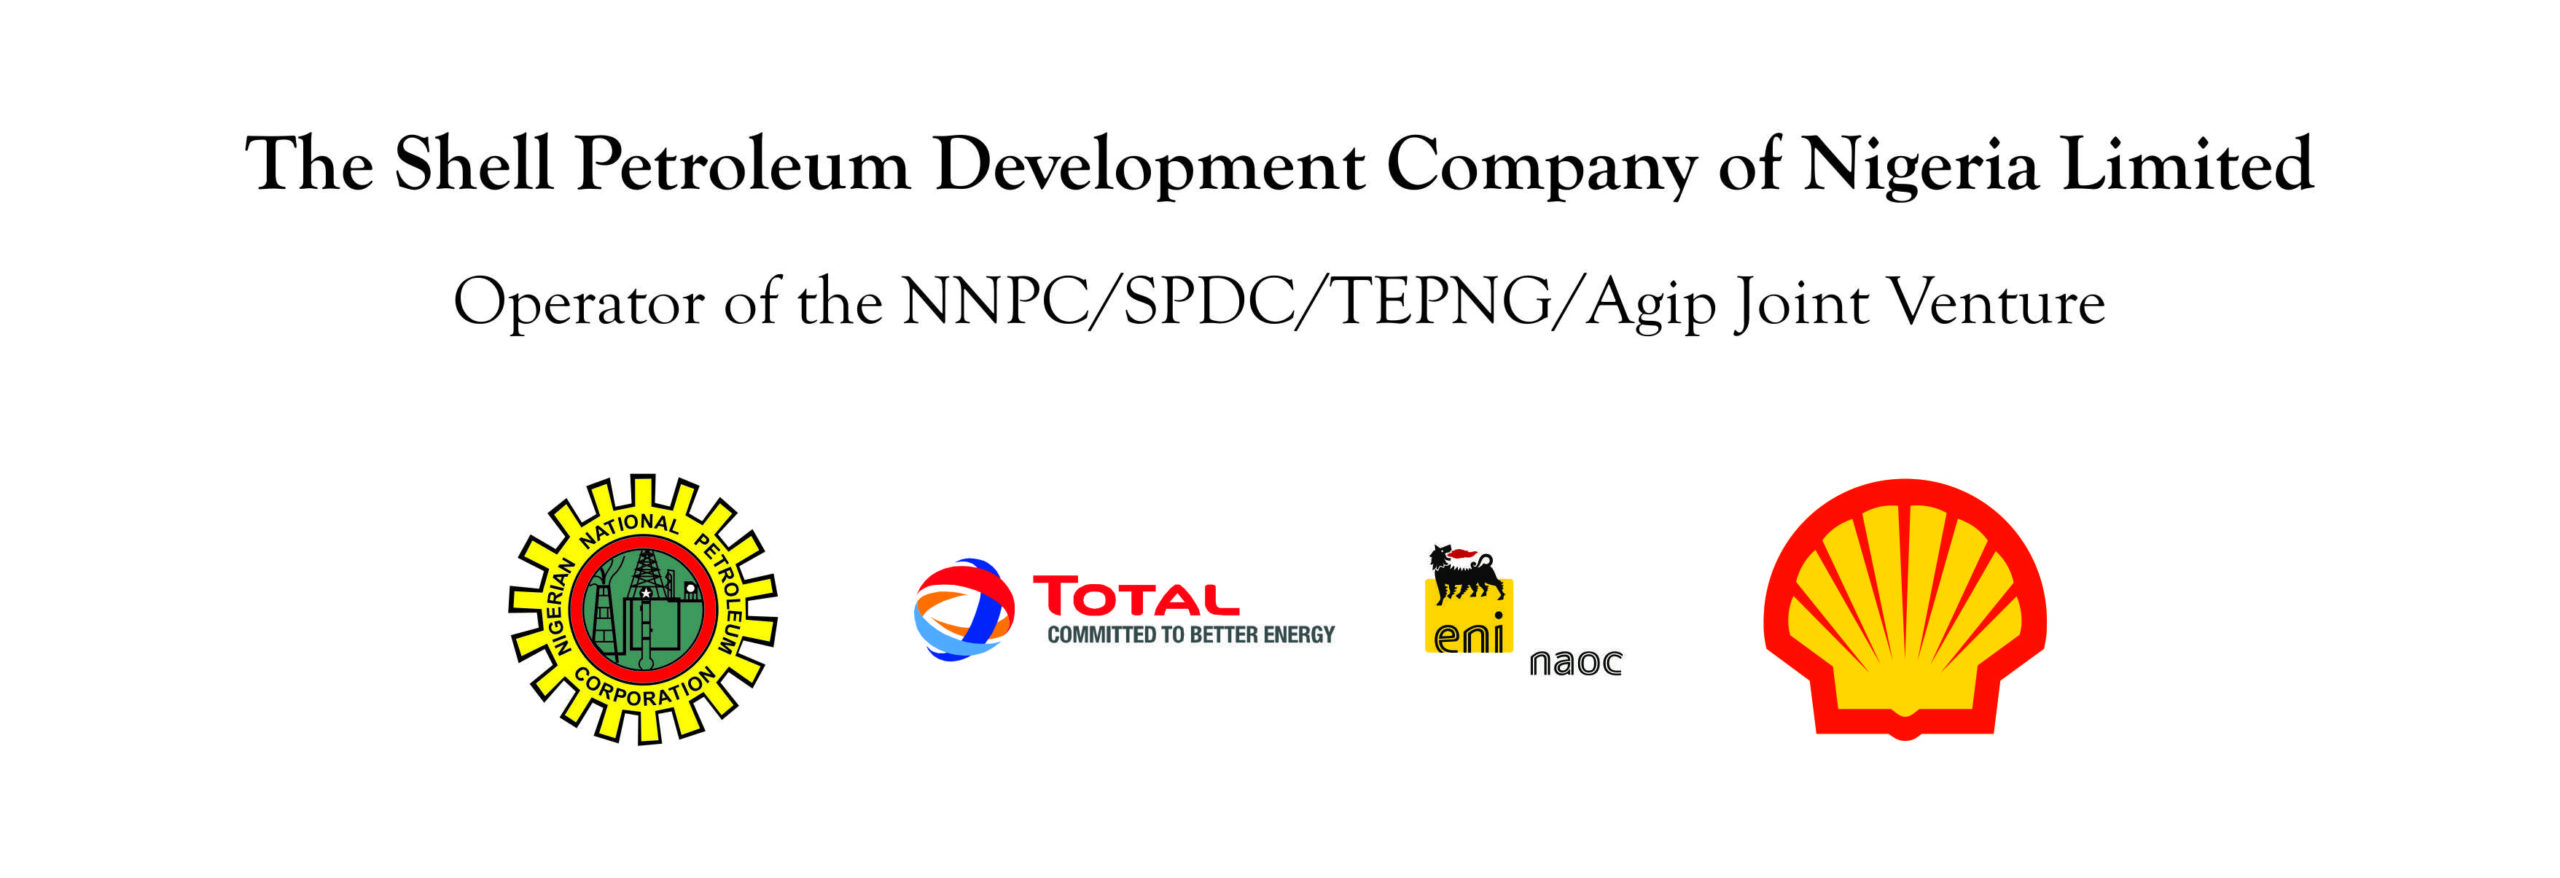 Shell Companies in Nigeria